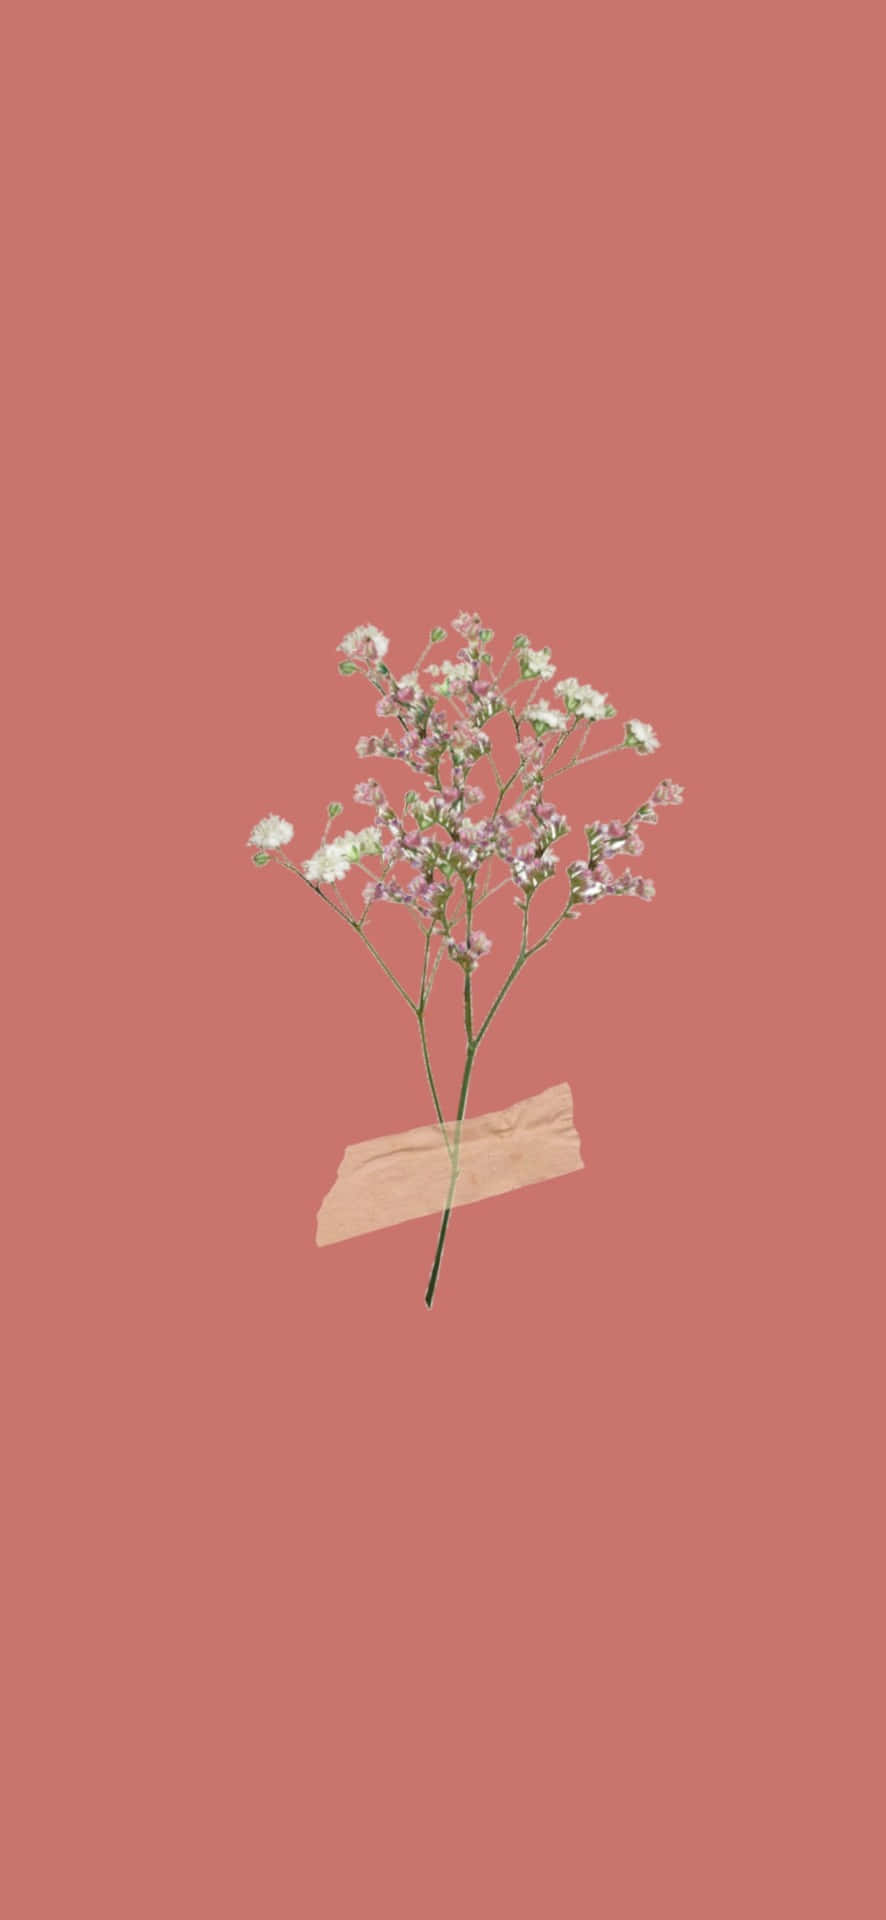 A beautiful single daisy standing alone in a meadow. Wallpaper